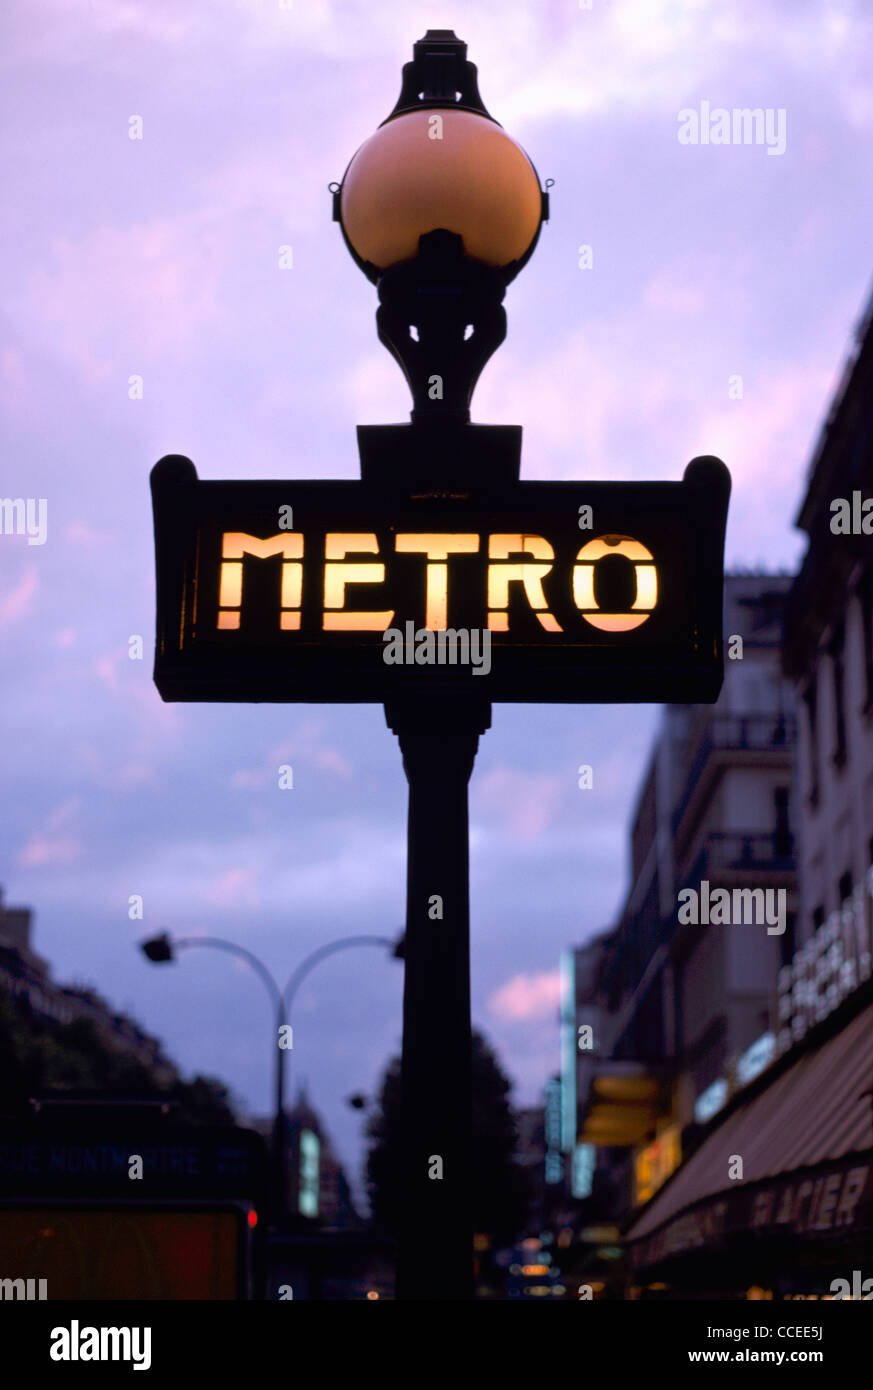 An iconic Art-Nouveau illuminated sign outside Poissonniere Metro station, Paris, France, at dusk. Stock Photo